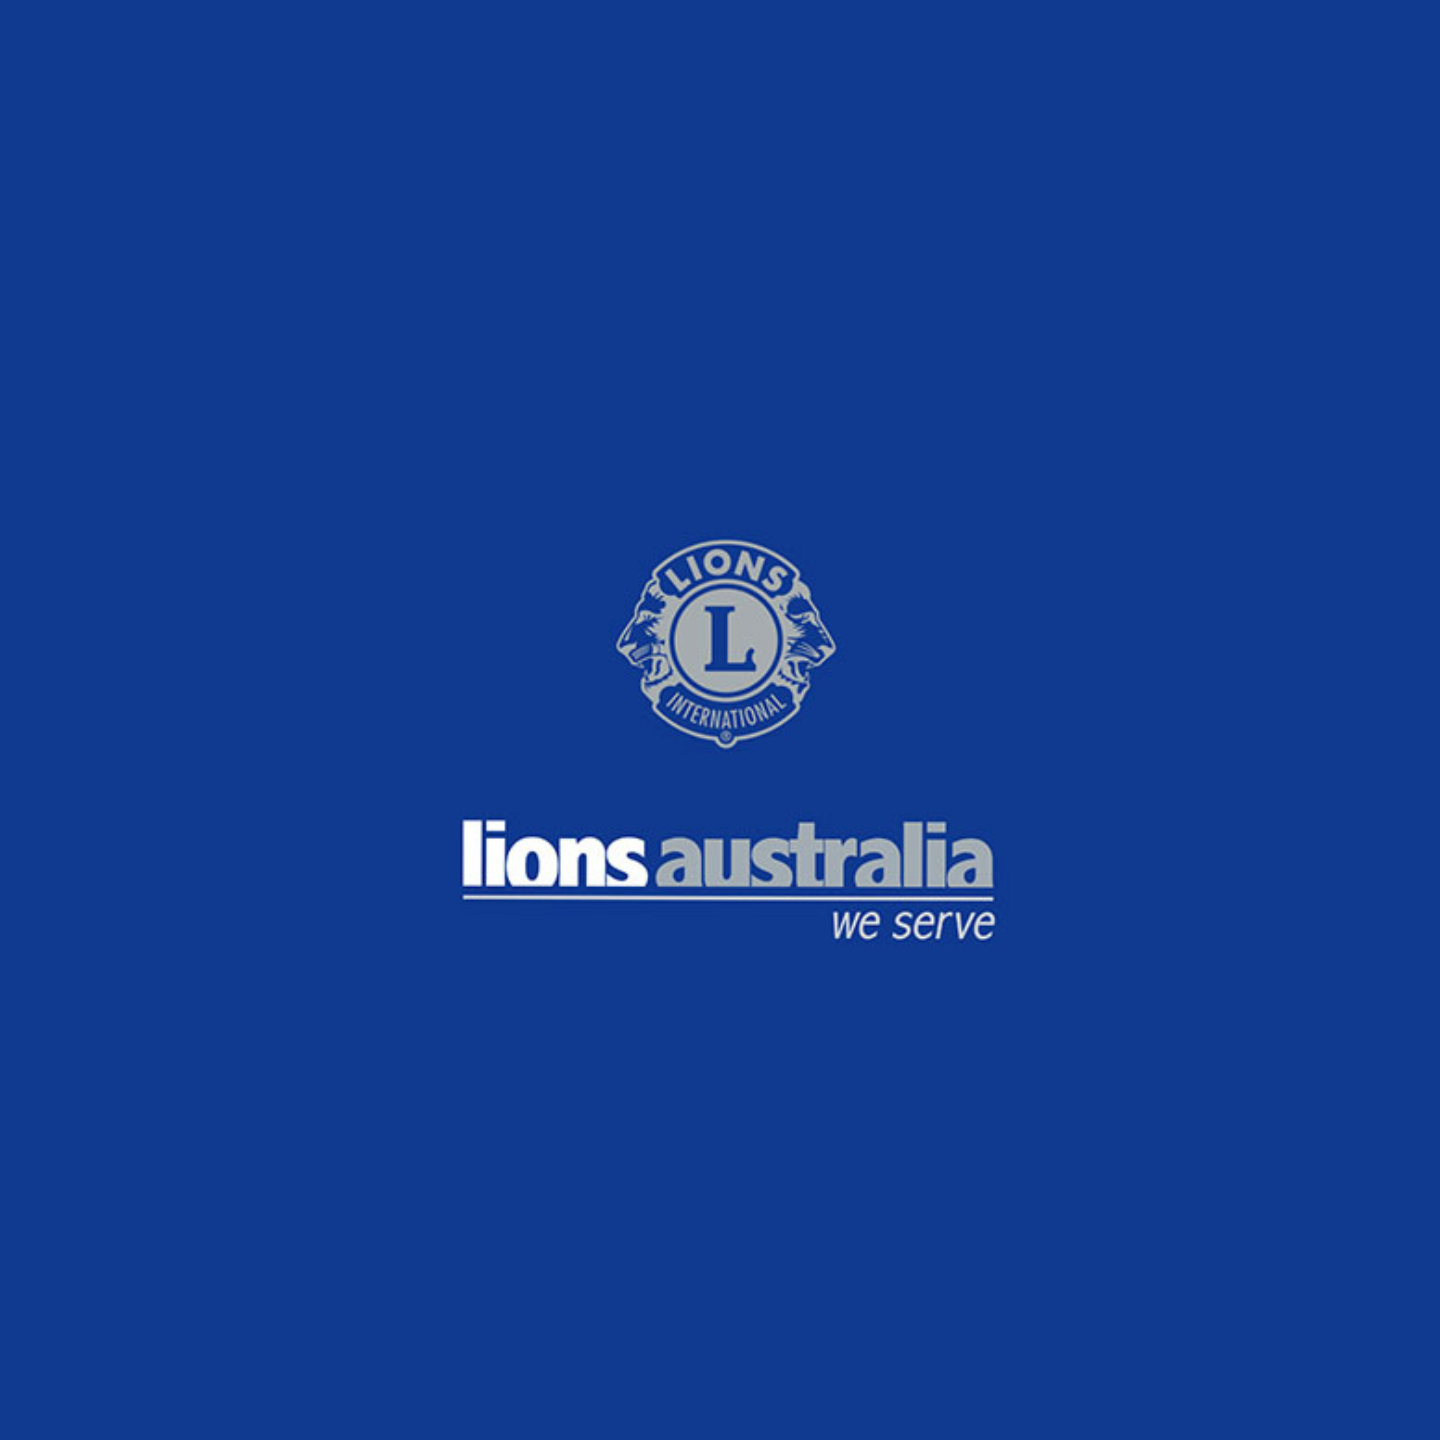 lions australia